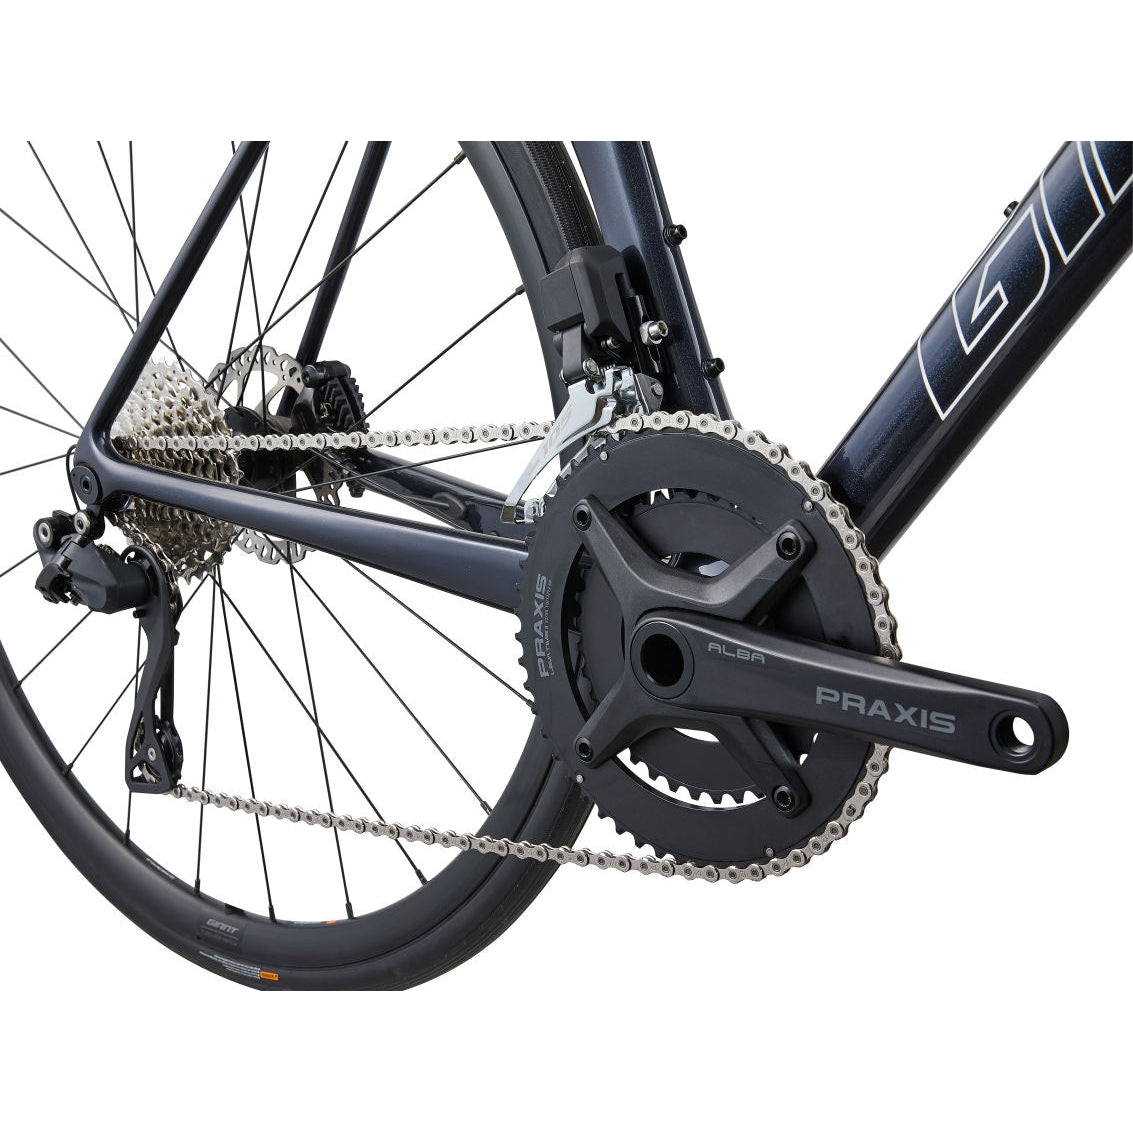 Giant TCR Advanced Disc 1 Pro Compact Road Bike - Bikes - Bicycle Warehouse